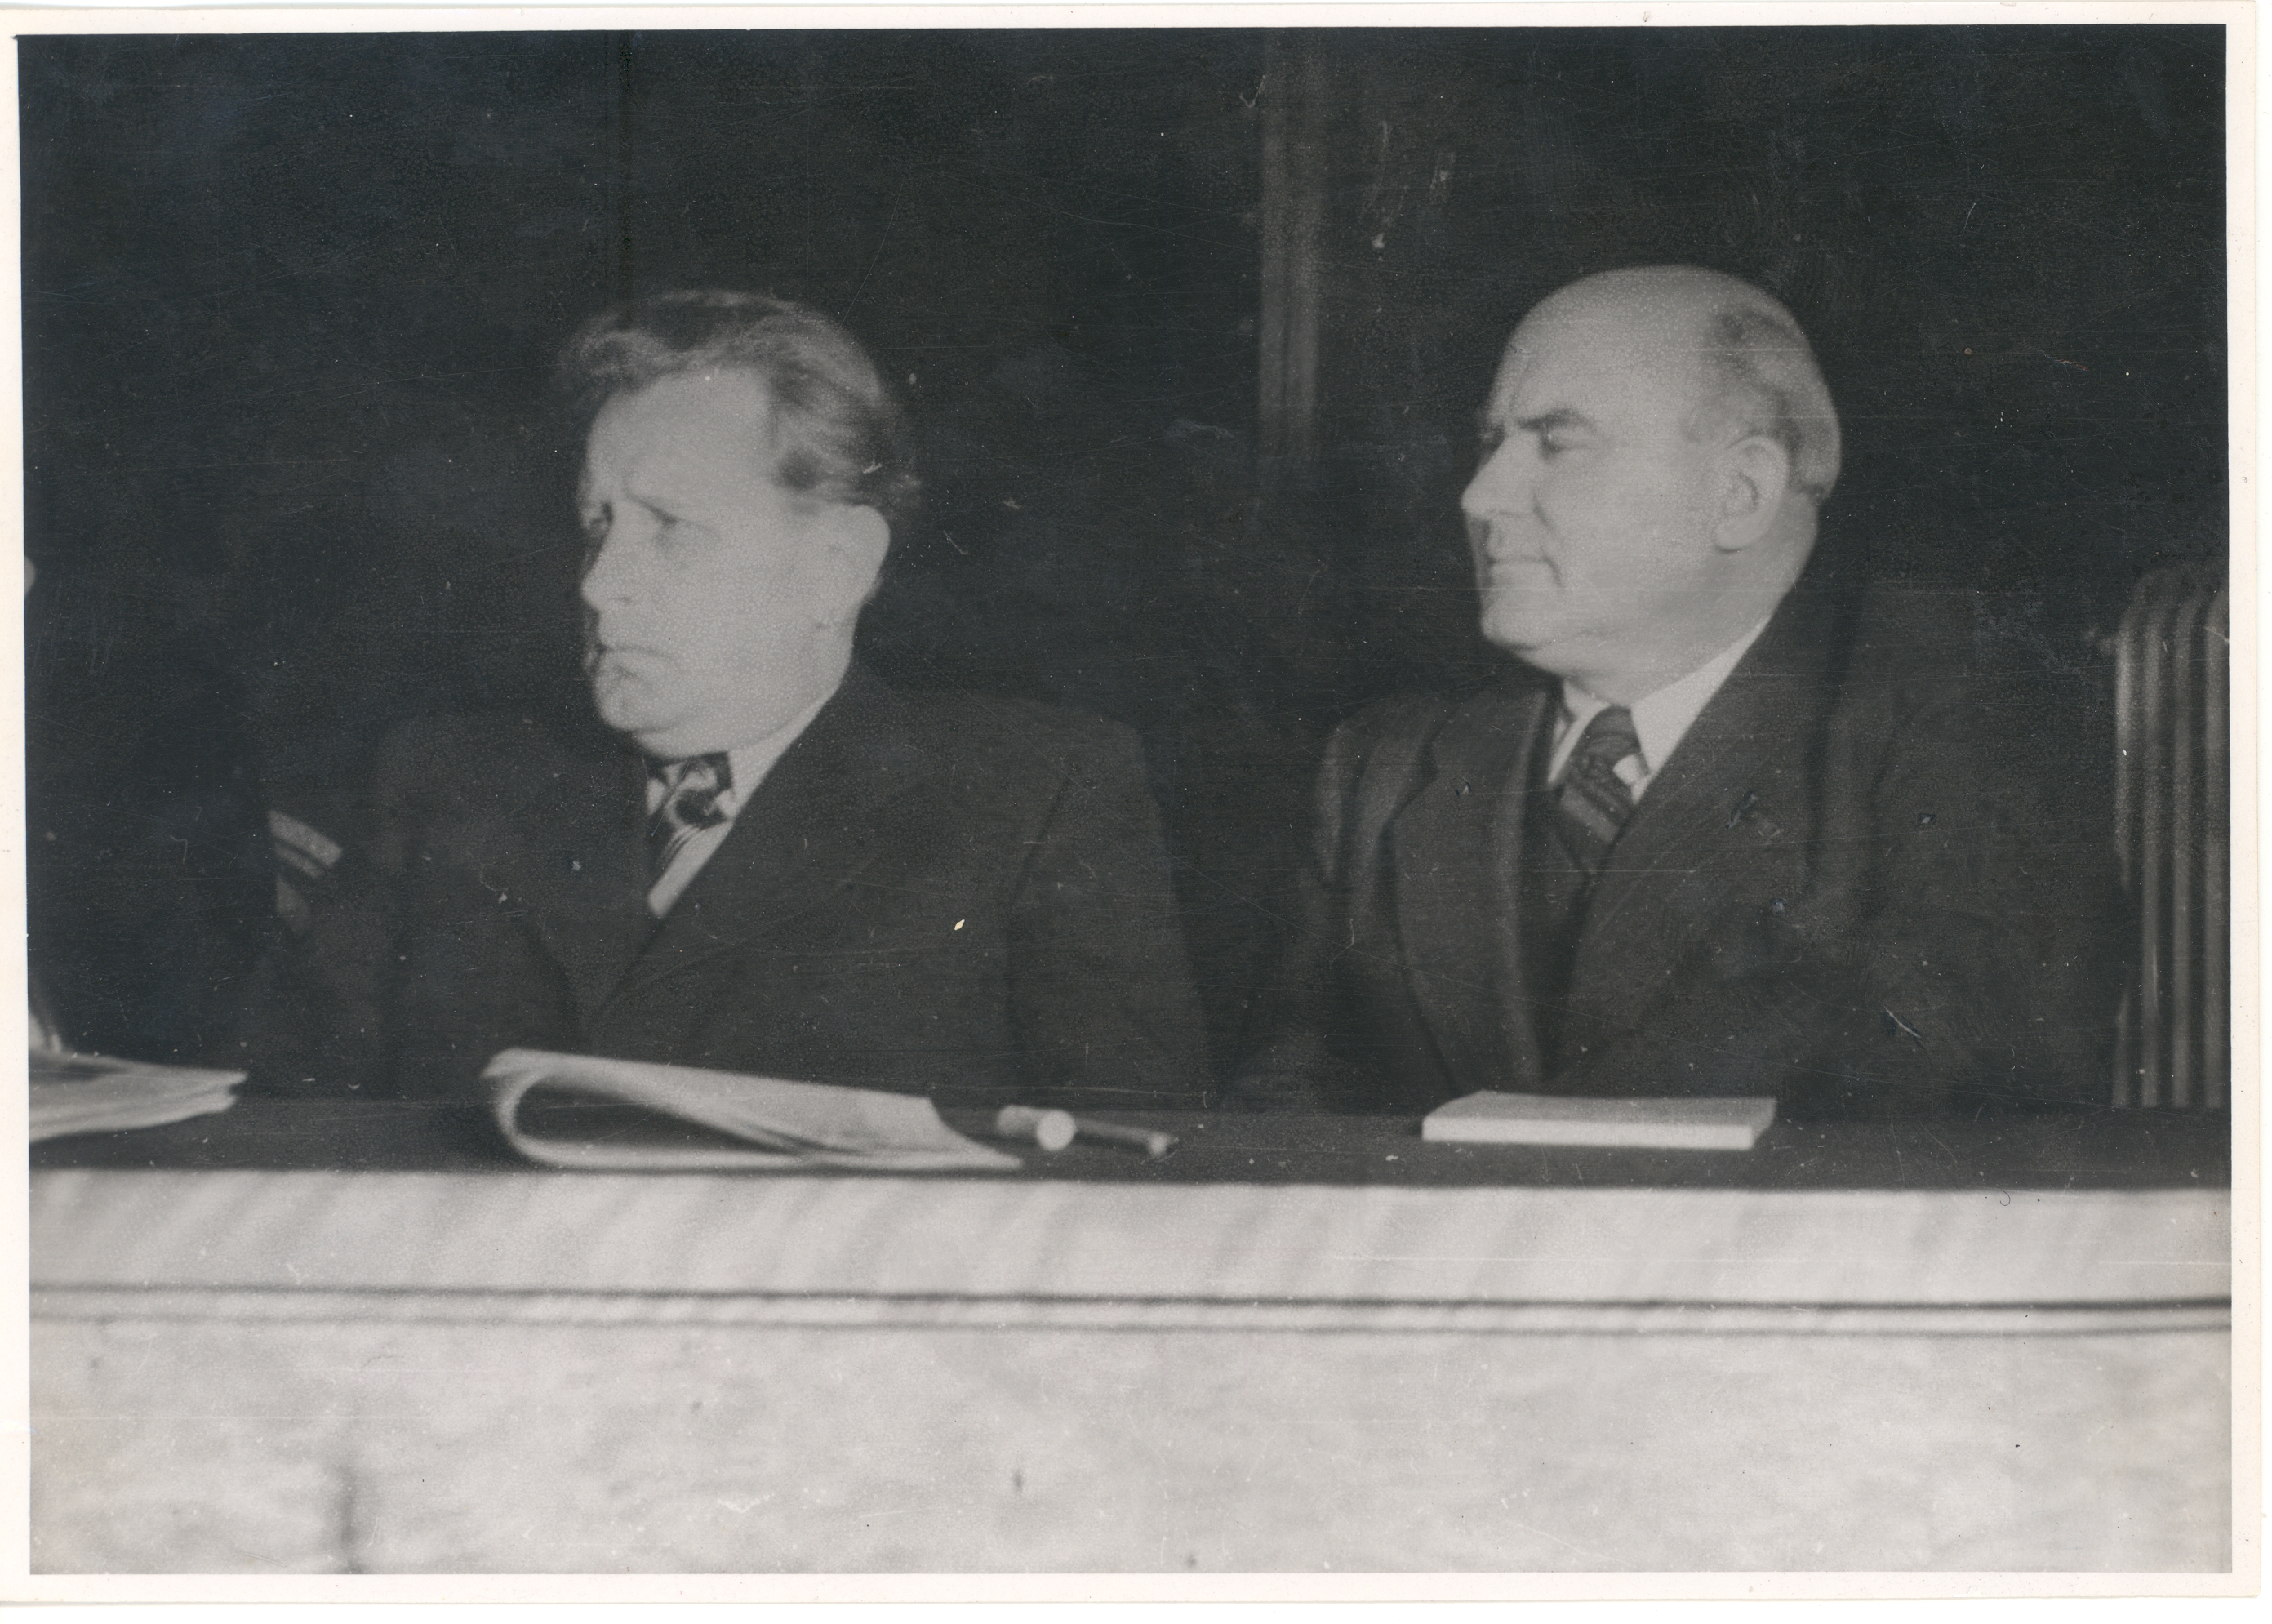 From the left: Nikolai Karotamm and John Vares-Barbarus